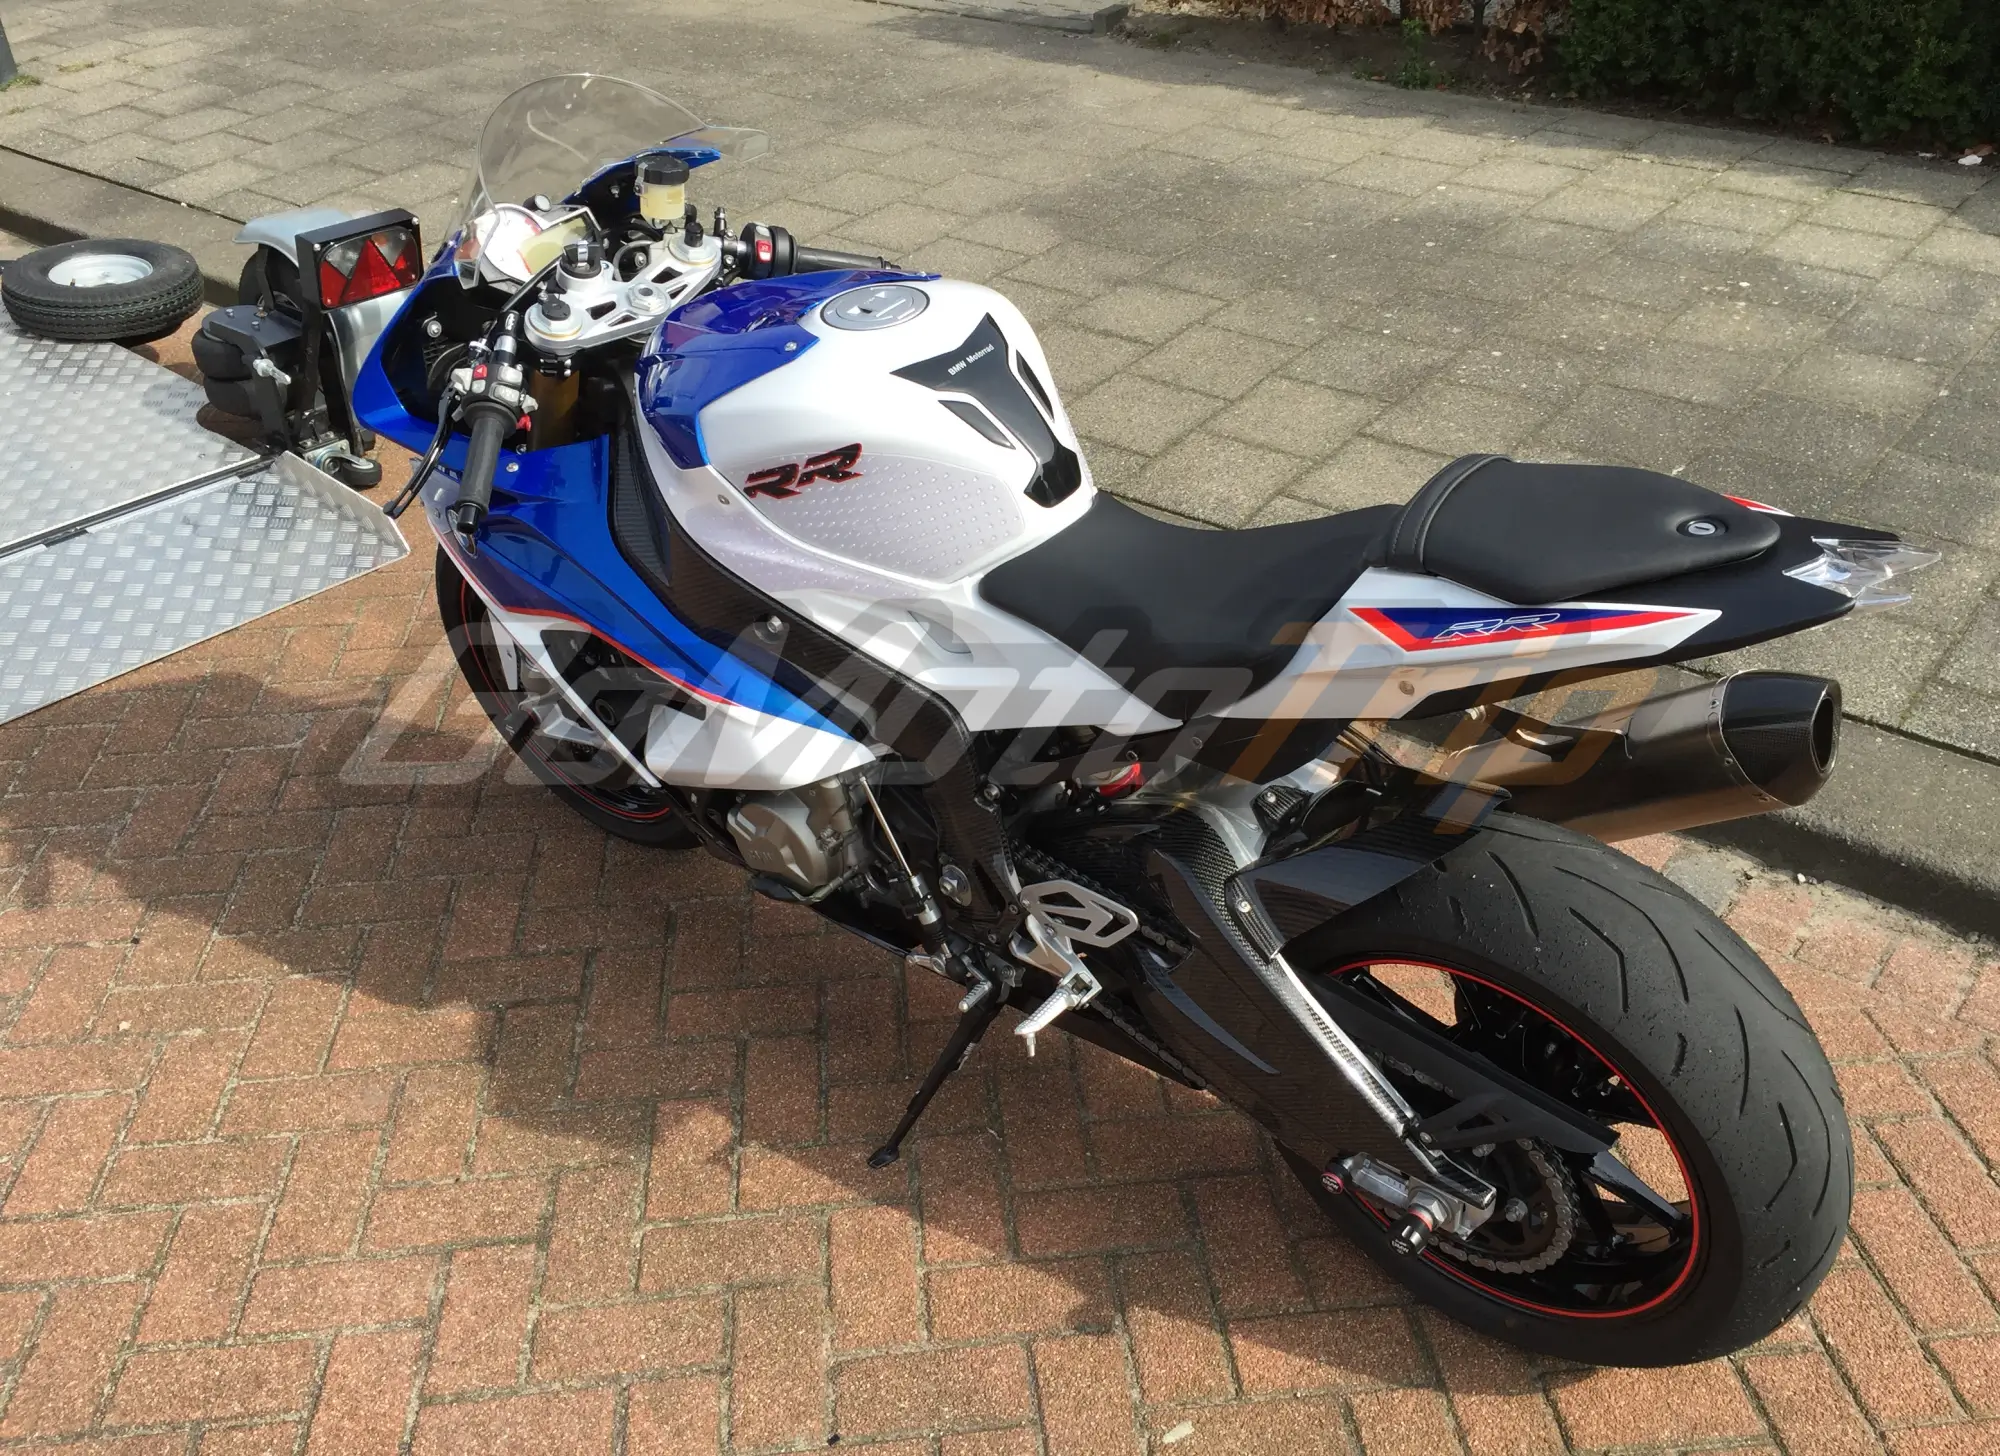 Rider-Review-64155-BMW-S1000RR-Blue-White-Fairing-3